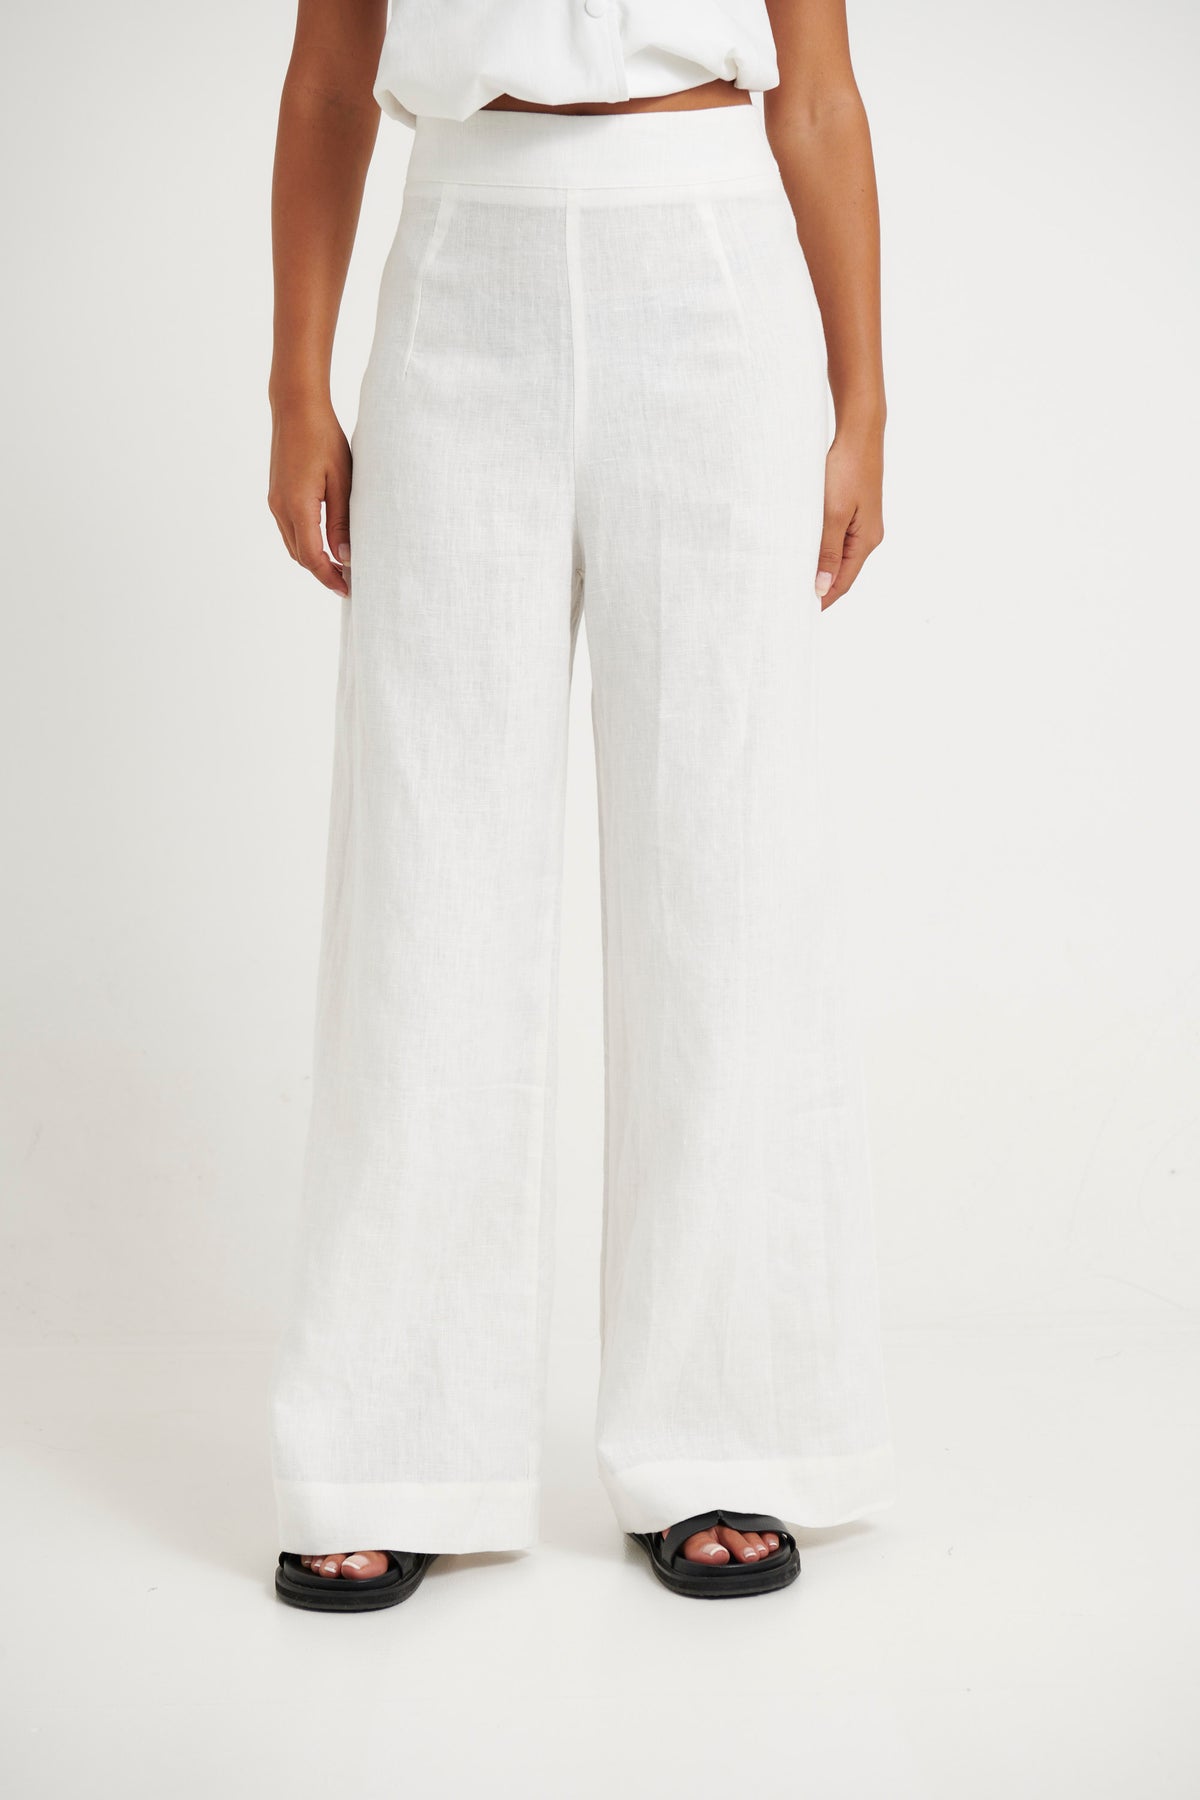 Wrenley Linen Pant White - FINAL SALE